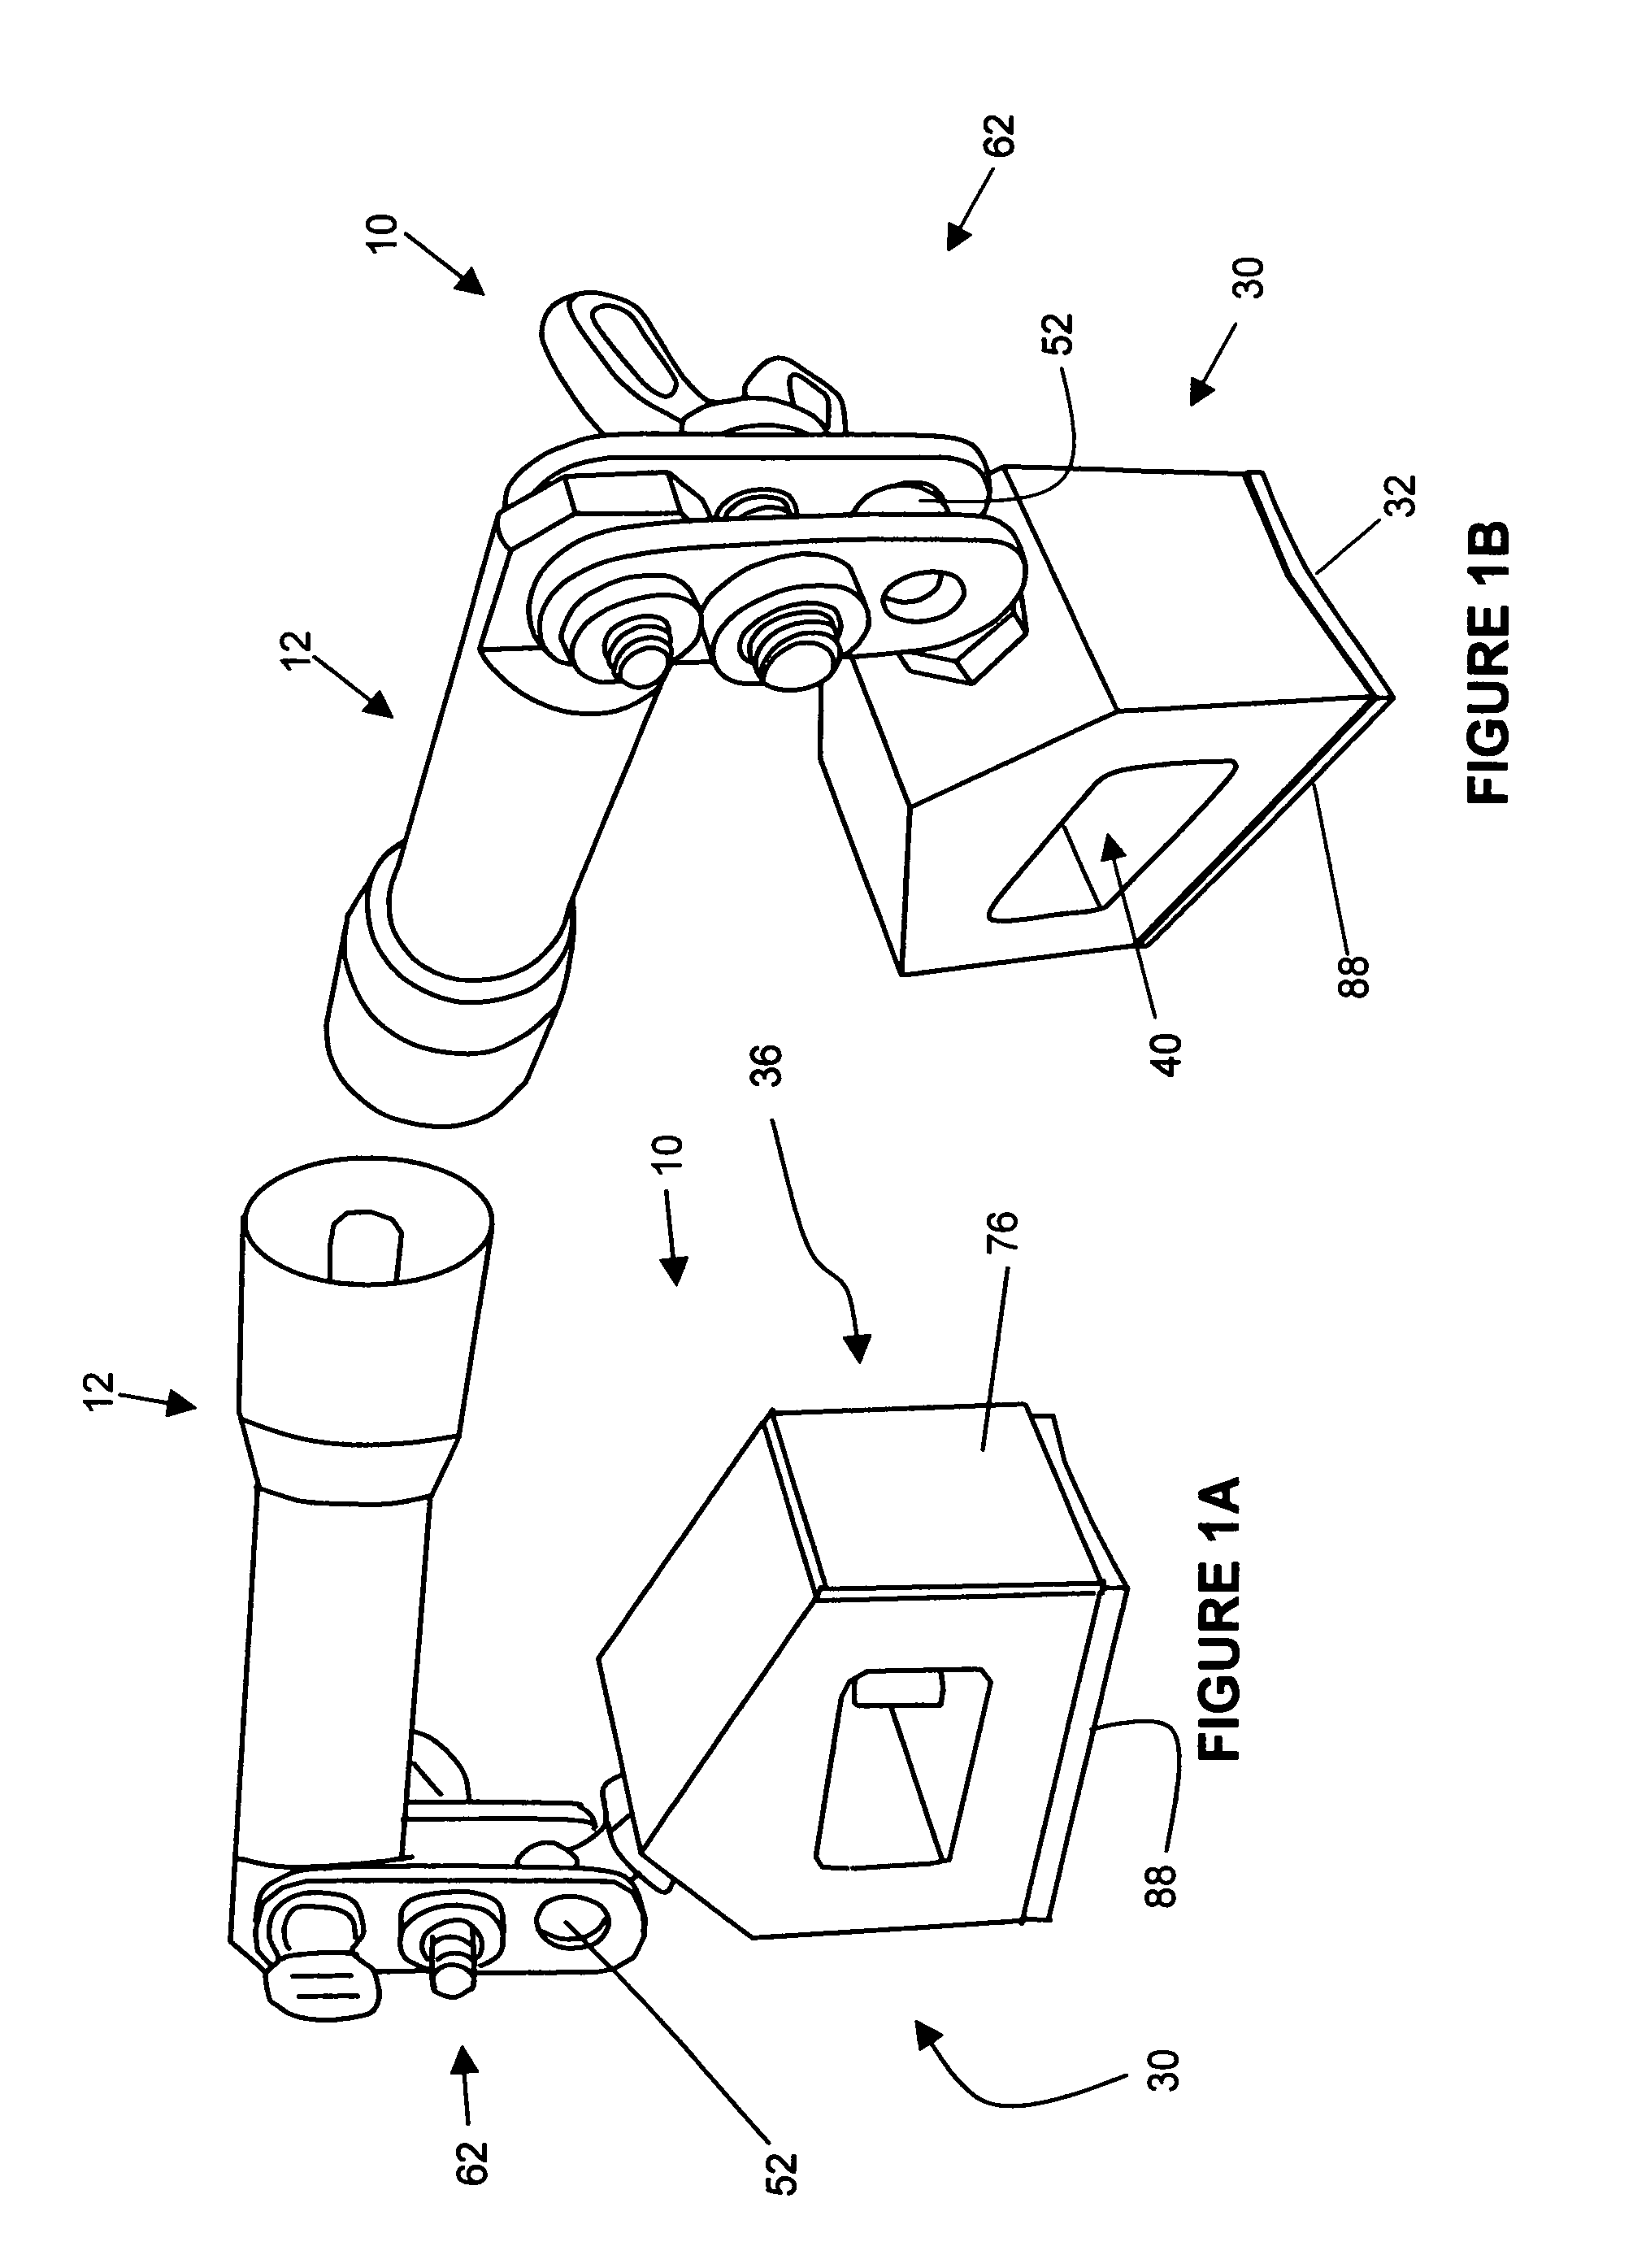 Light mounting apparatus